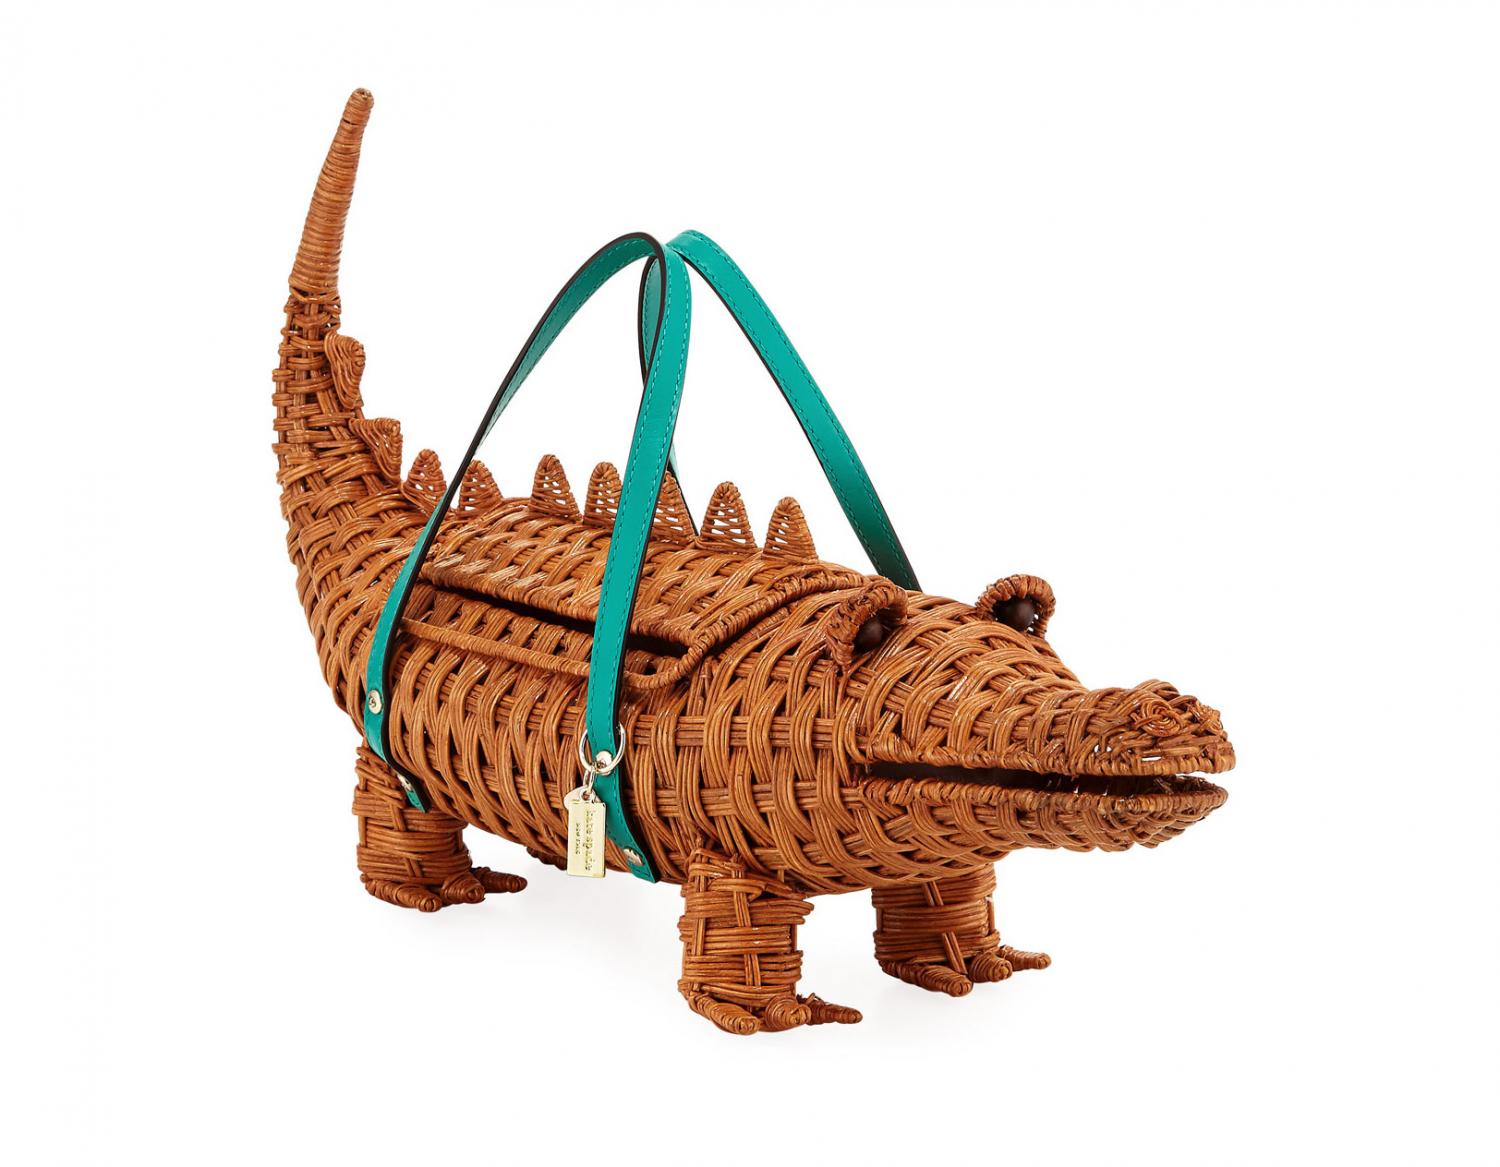 Wicker Alligator handbag by Kate Spade